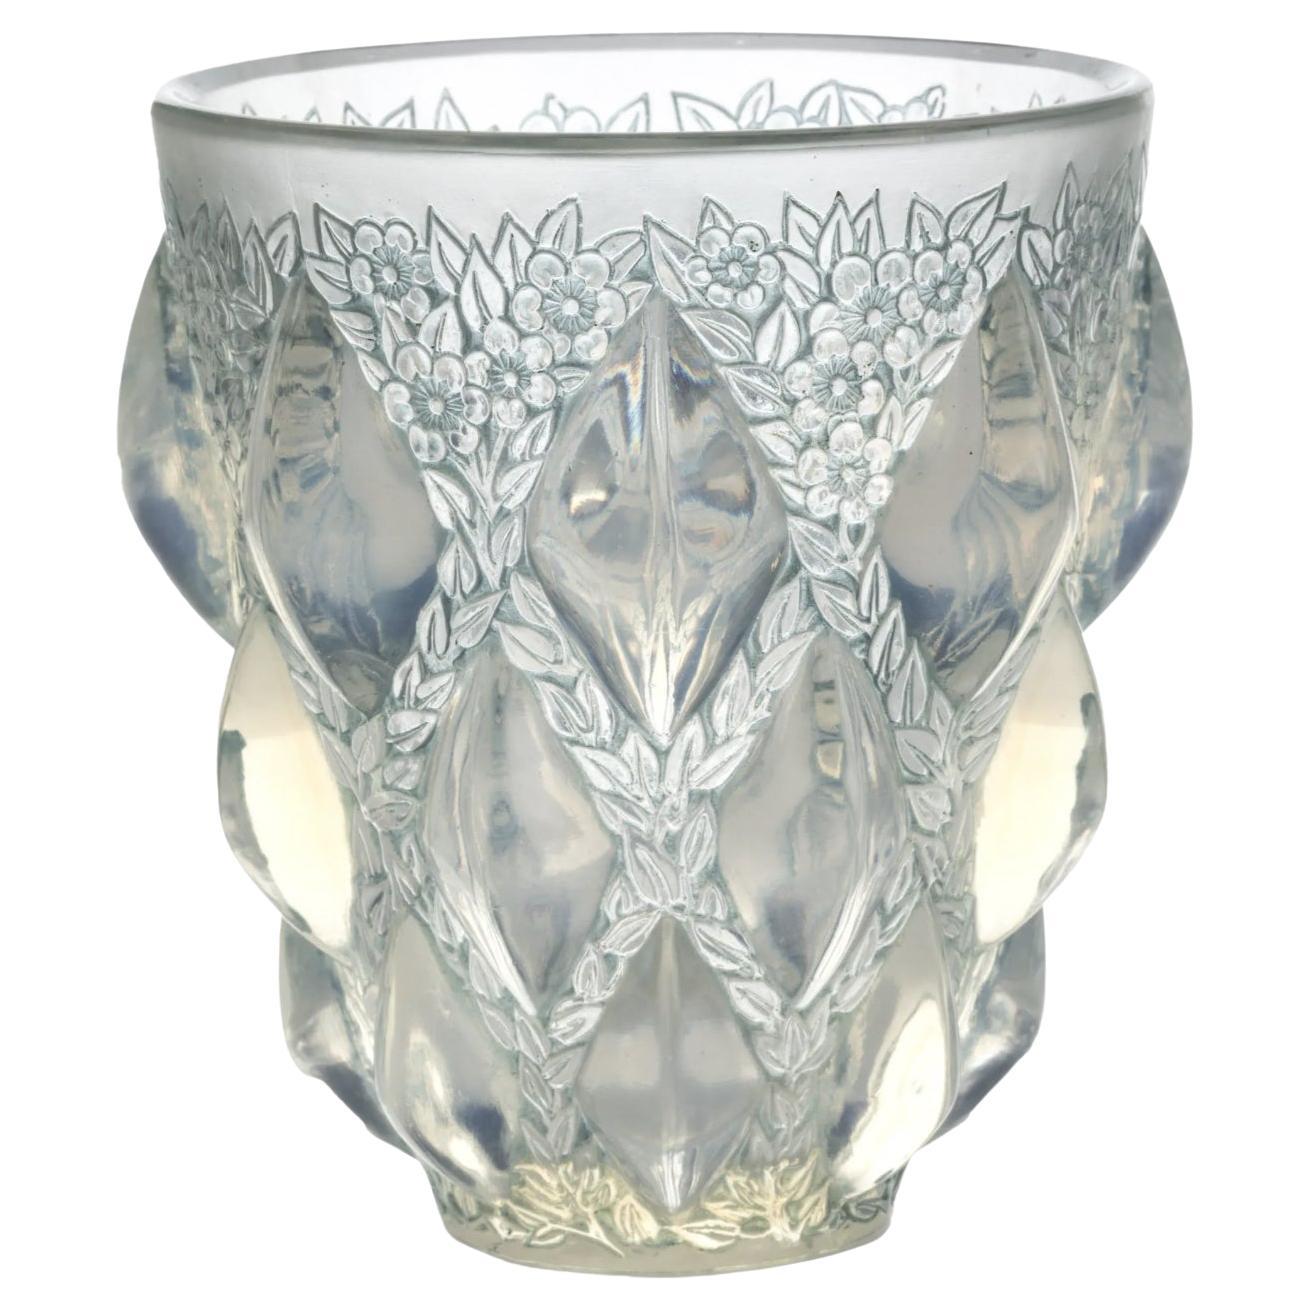 René Lalique: “Rampillon” vase in opalescent glass For Sale